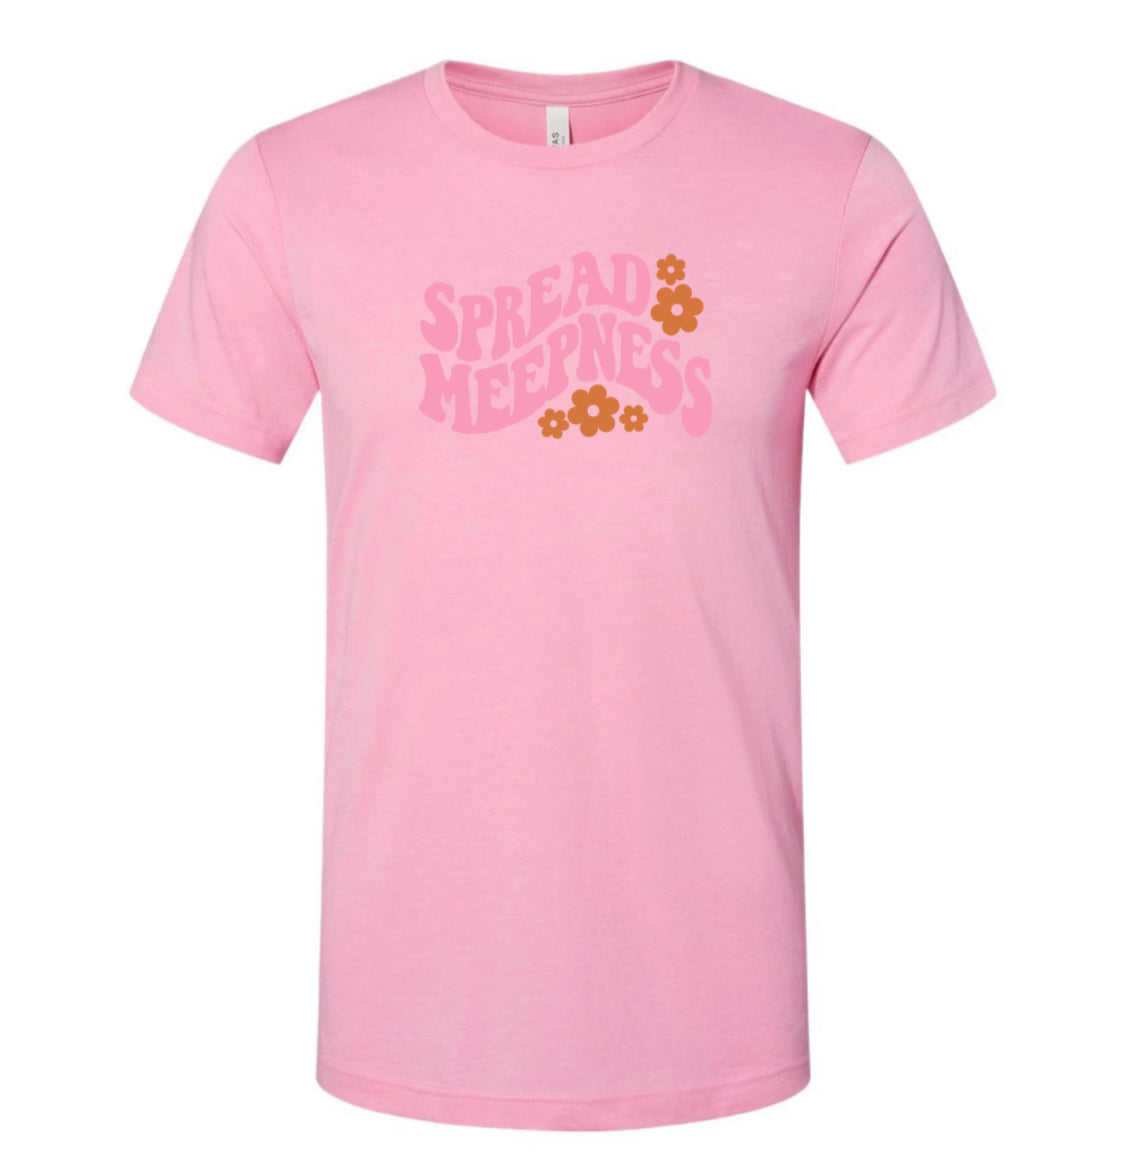 spread-meepness-hippie-chick-flower-child-bubble-gum-pink-adult-unisex-tshirt